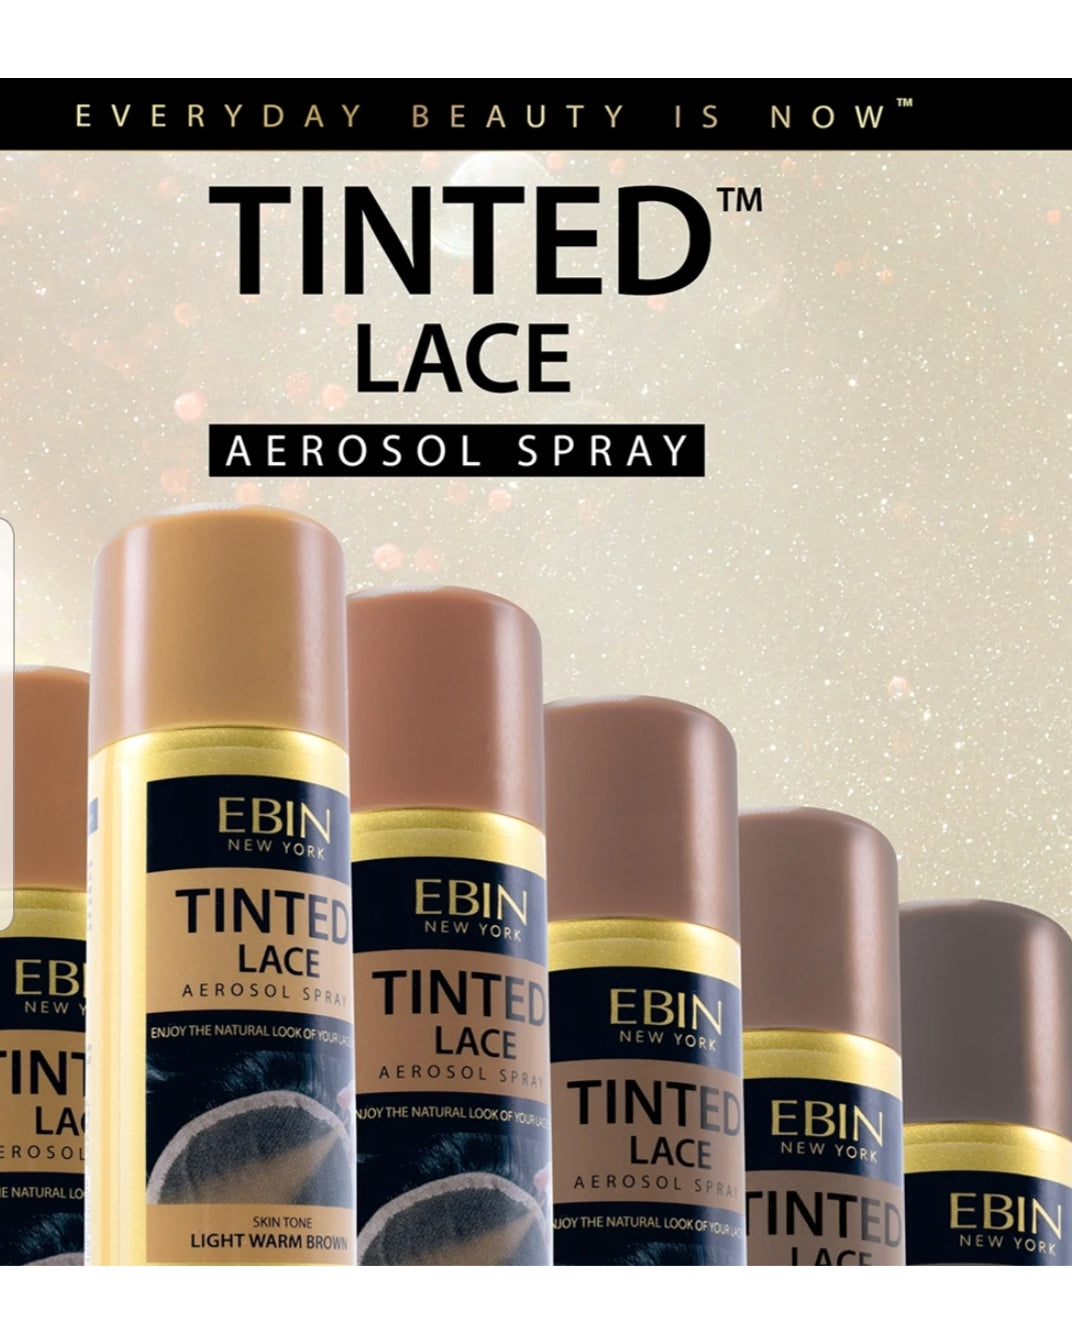 Tinted Lace Aerosol Spray - Ebin New York